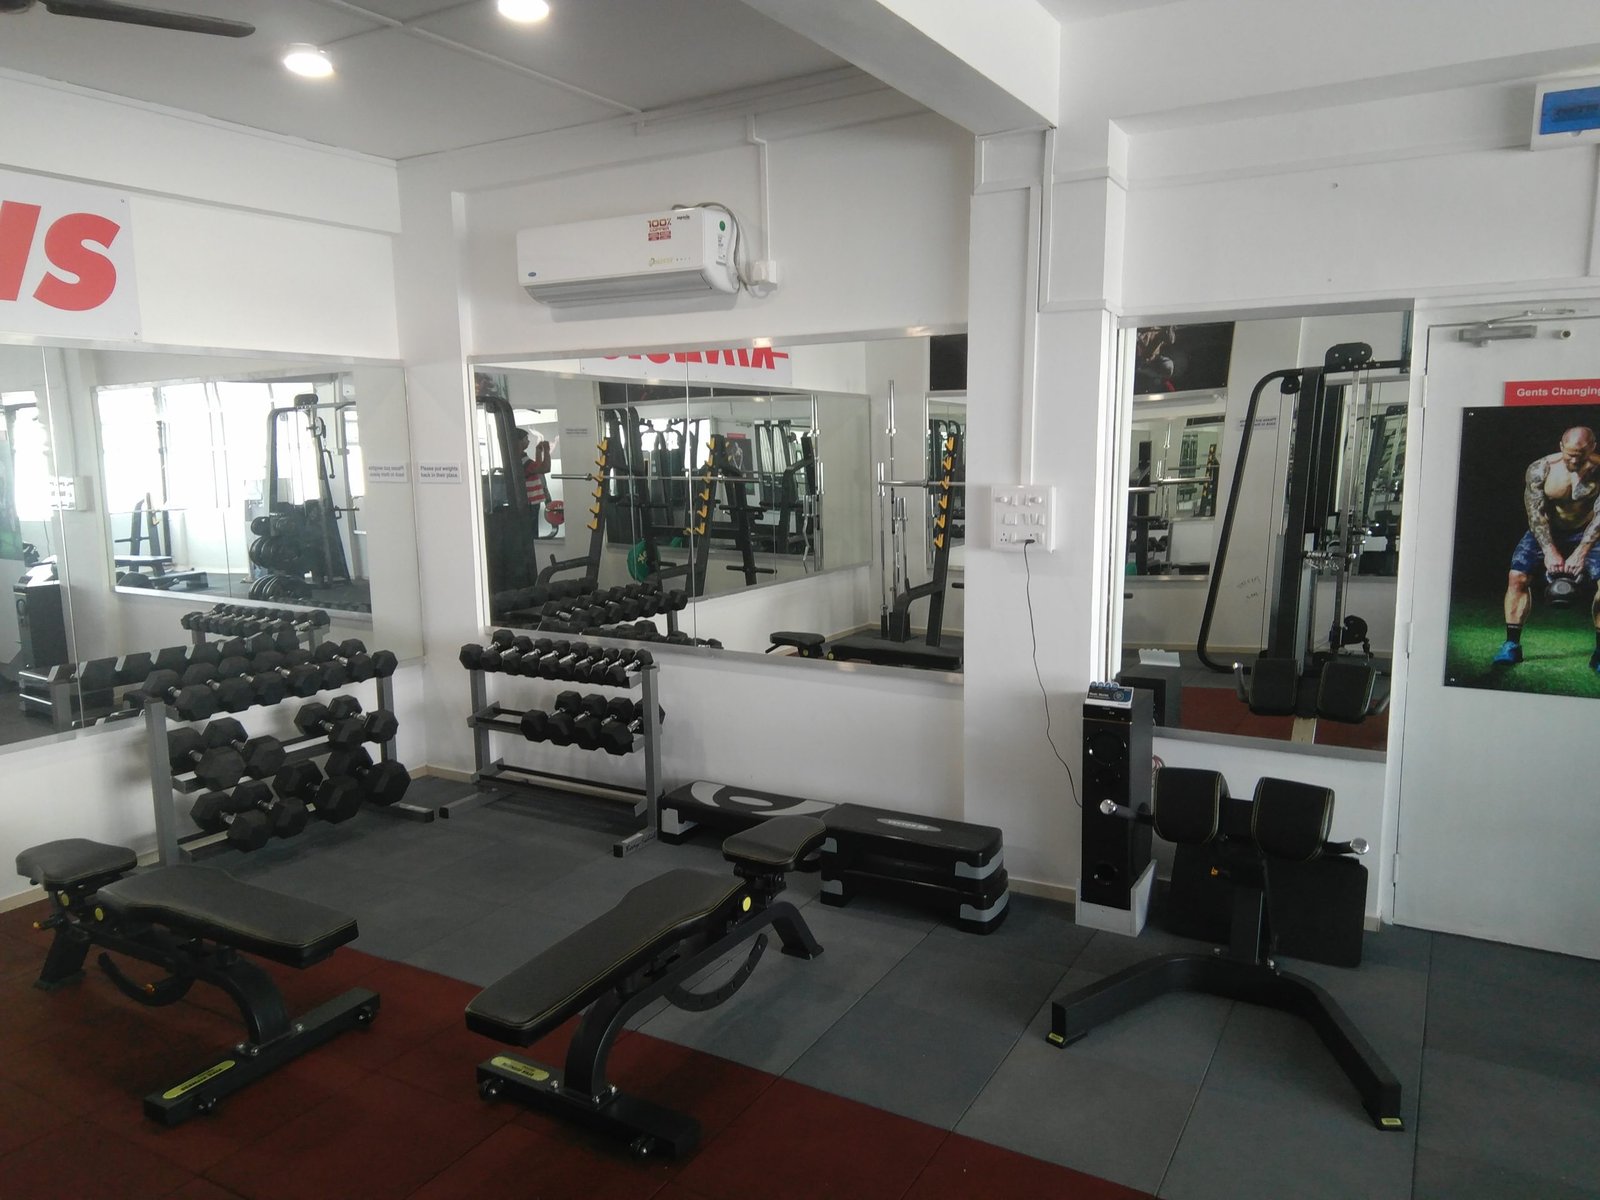 Full gym setup